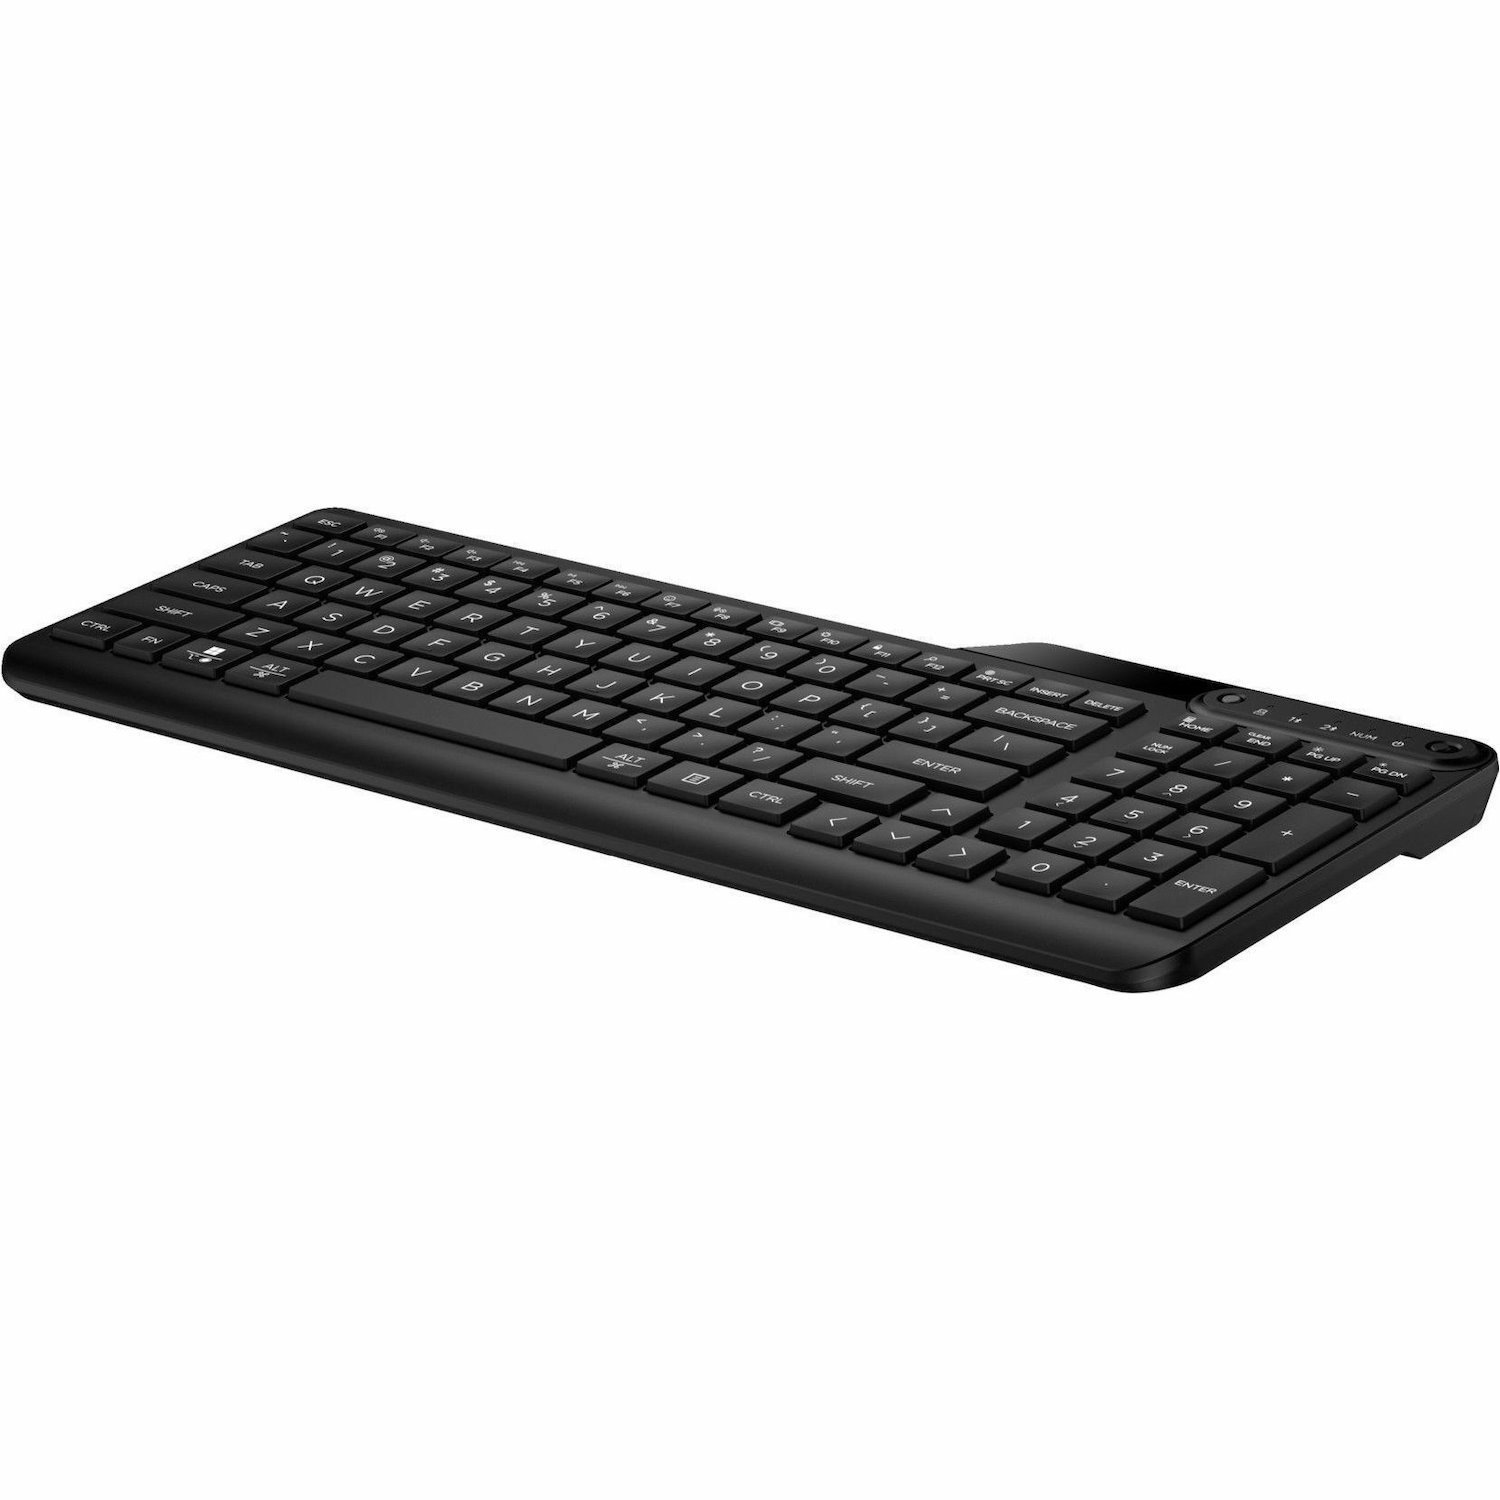 HP 475 Keyboard - Wireless Connectivity - USB Type A Interface - Jet Black